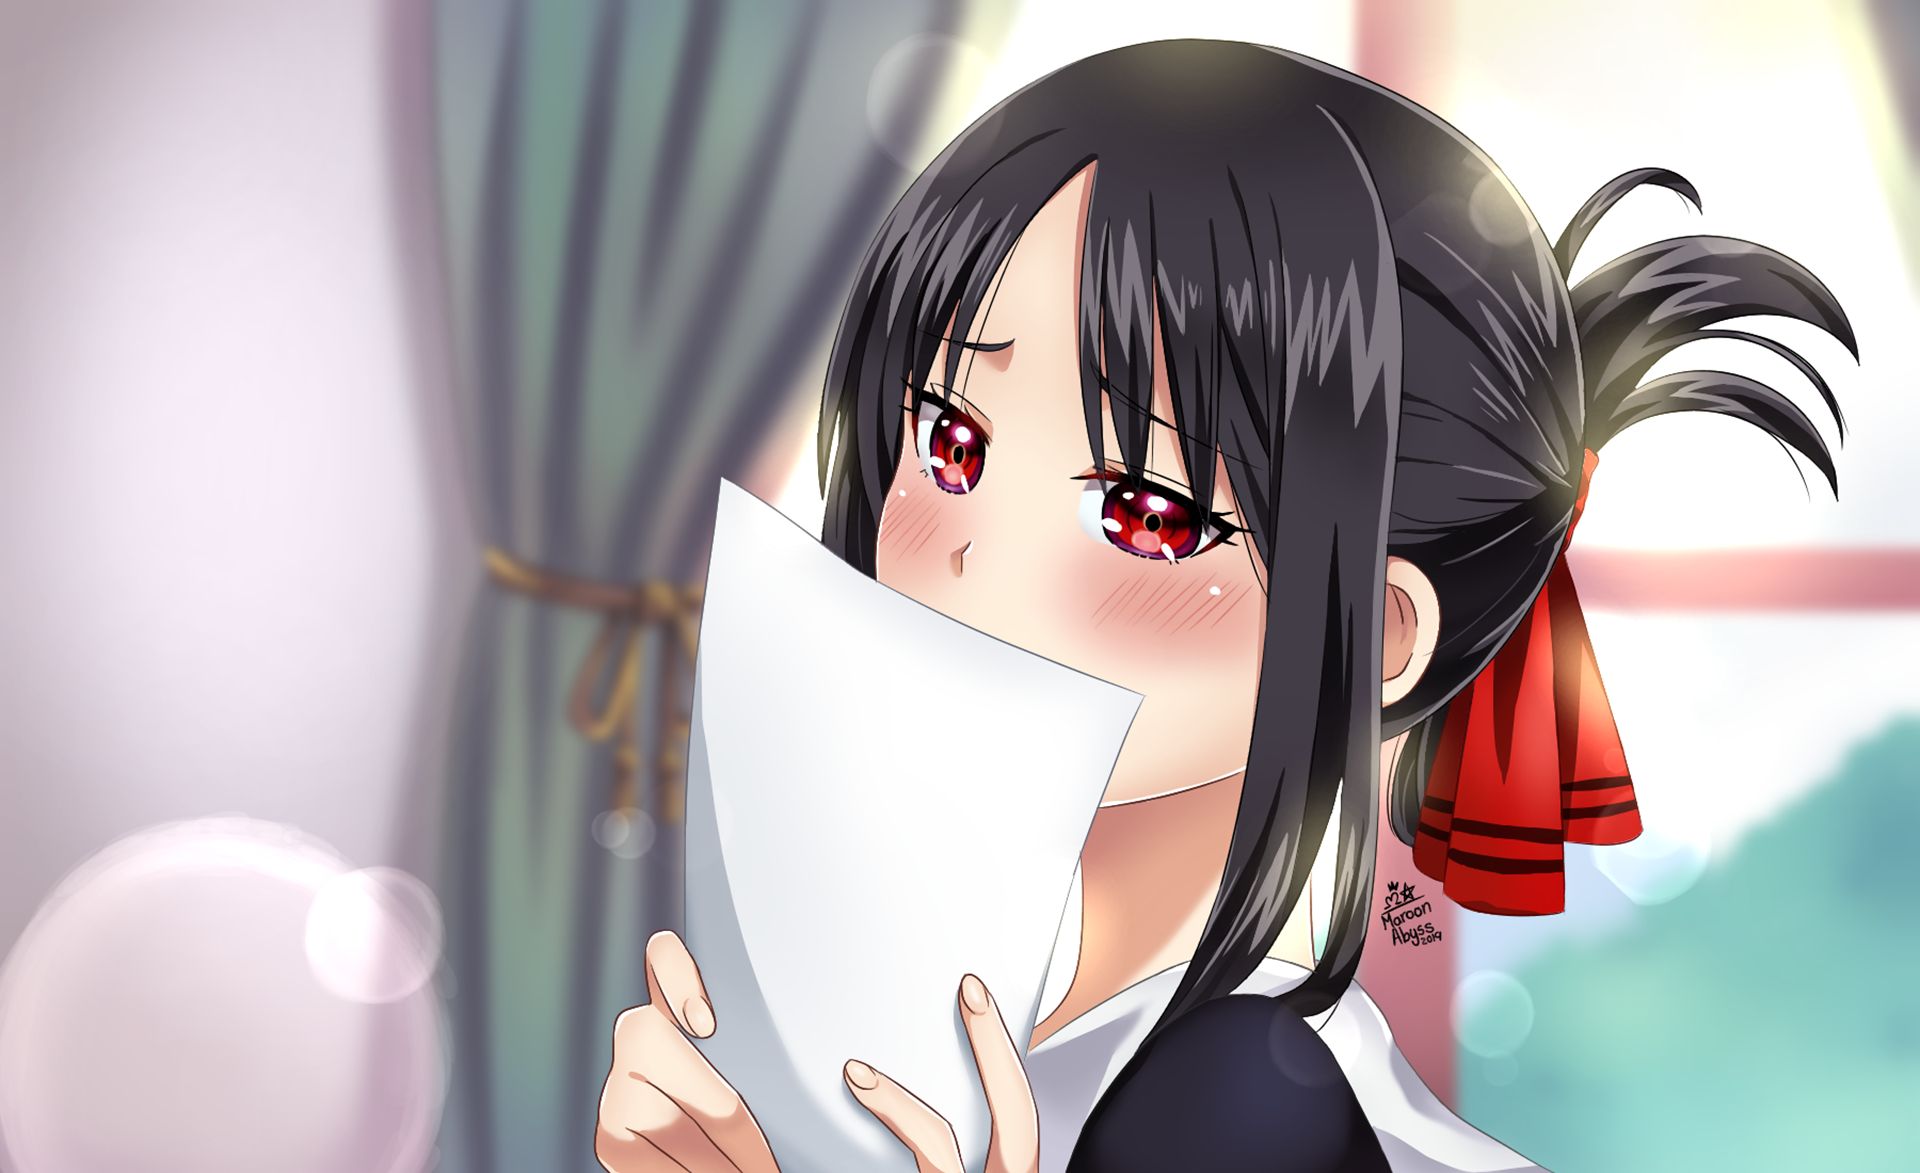 Téléchargez gratuitement l'image Animé, Kaguya Sama: Love Is War, Kaguya Shinomiya sur le bureau de votre PC